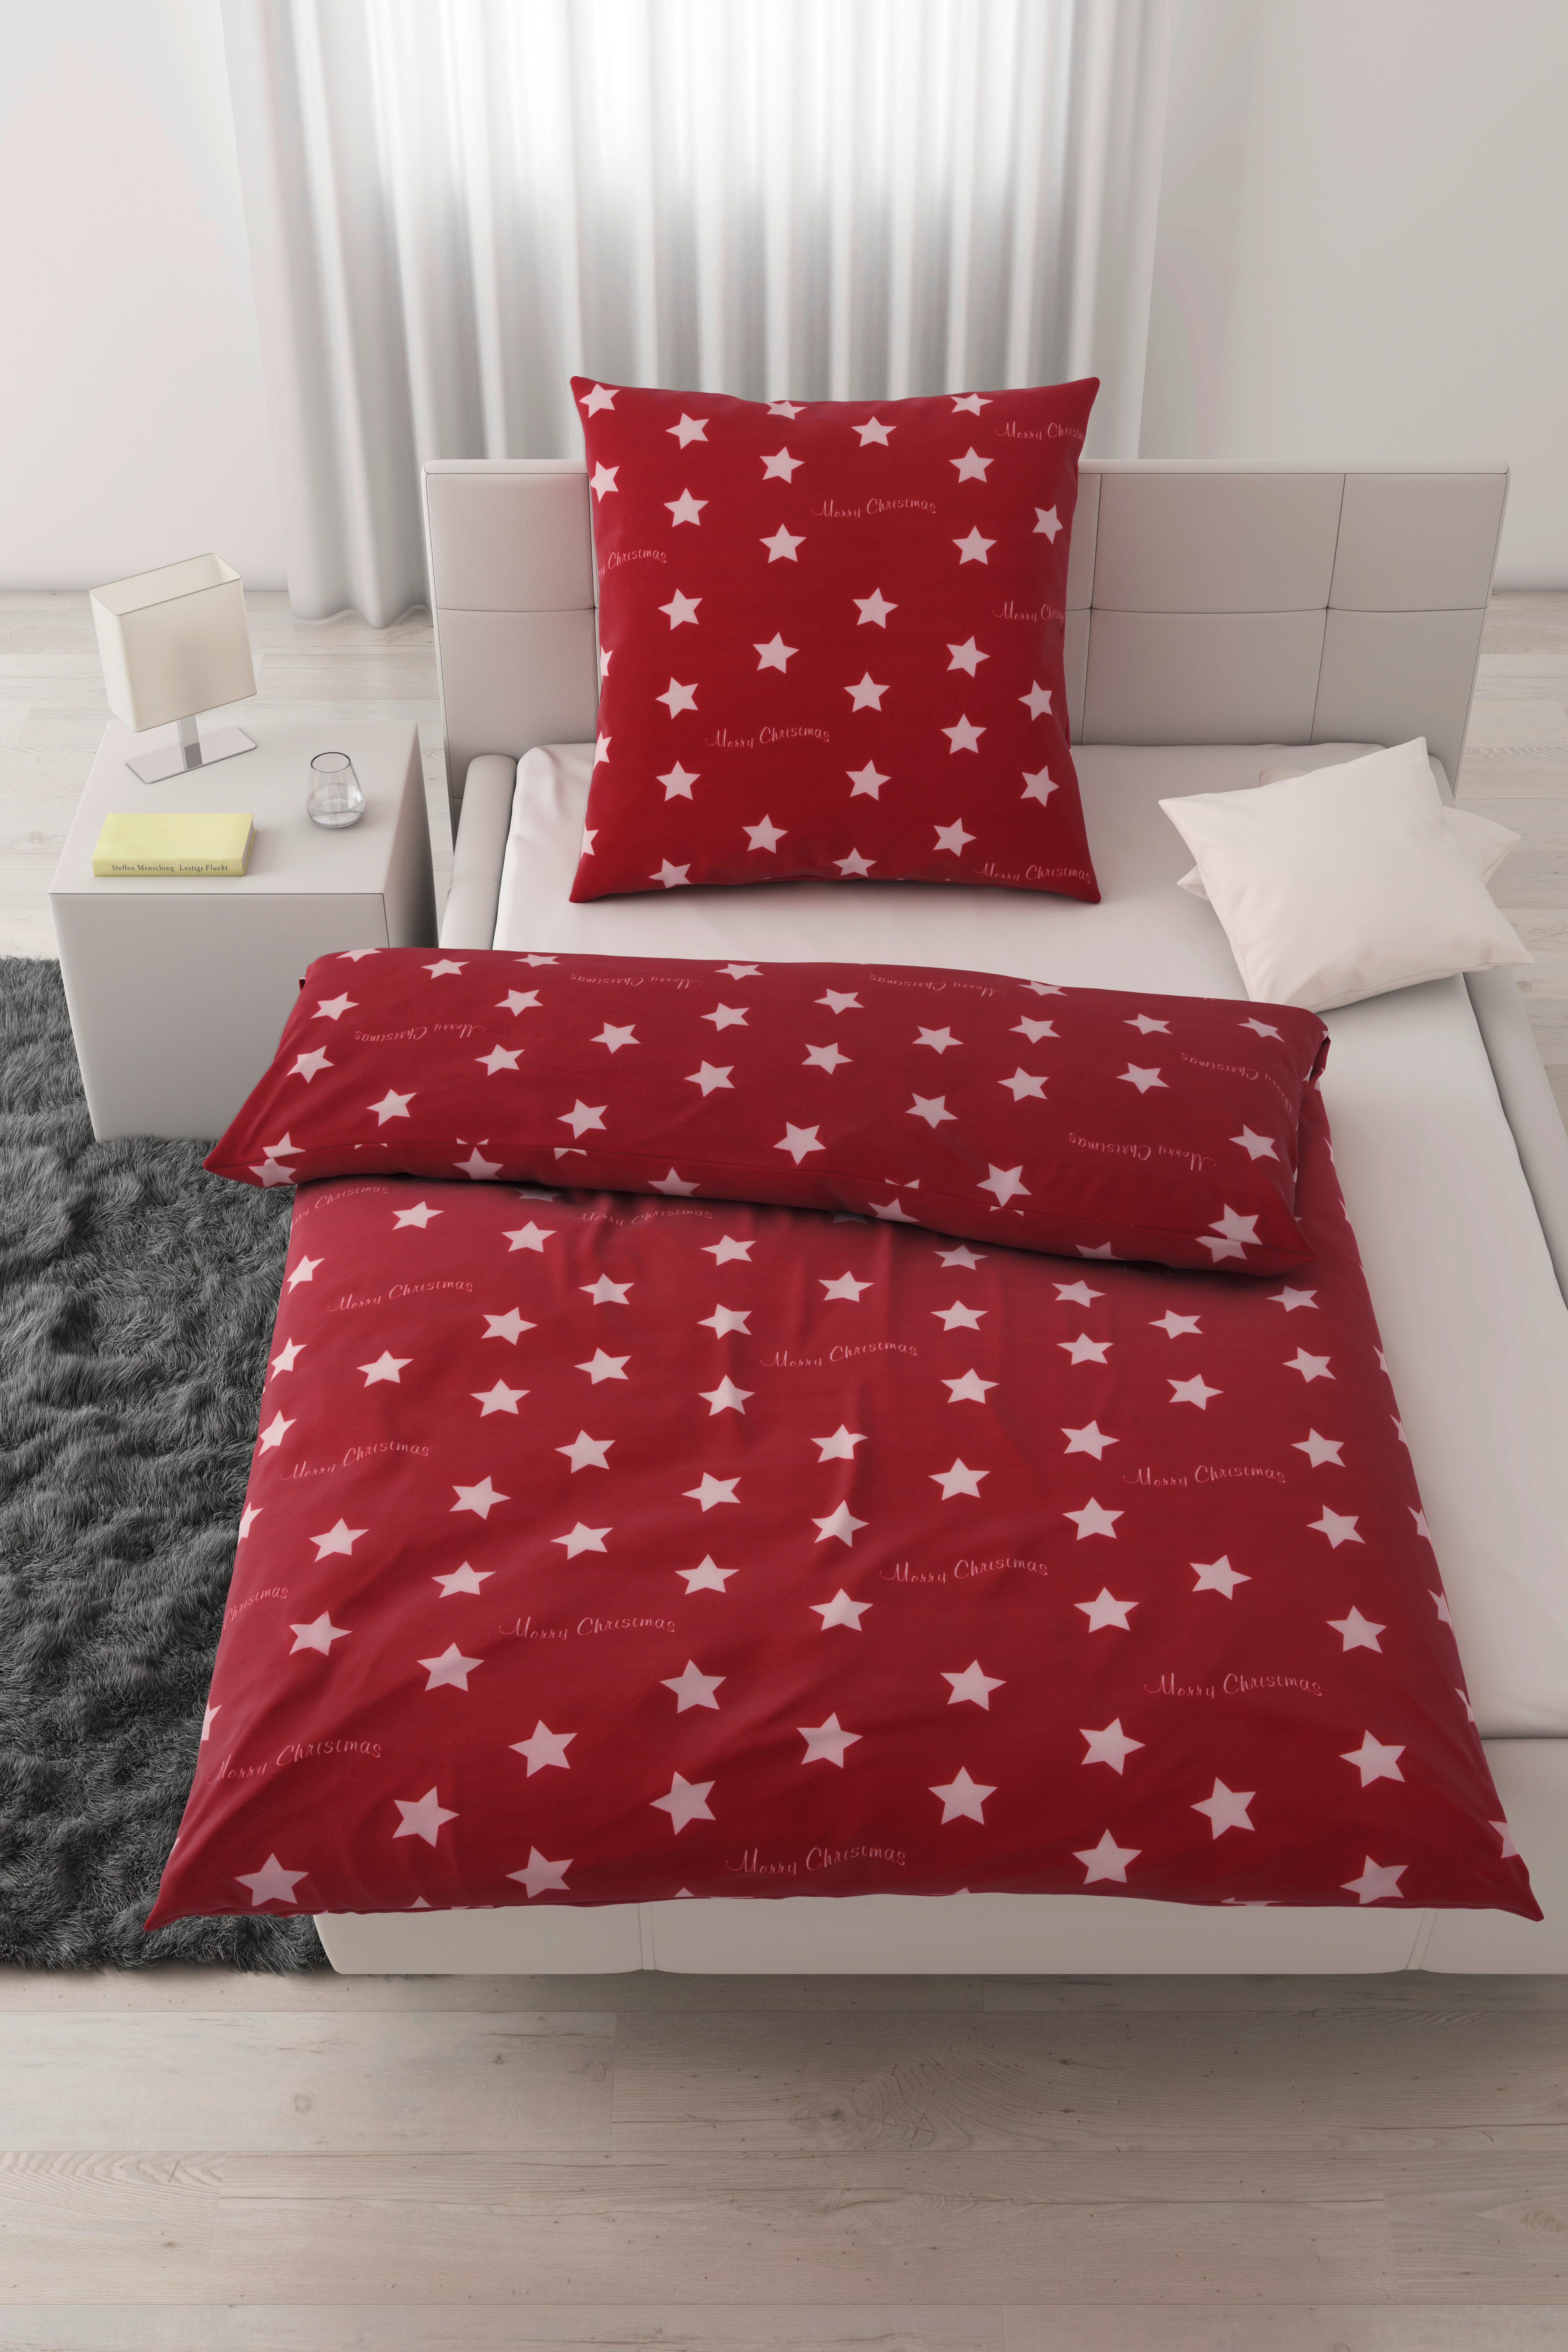 Bettwäsche Stars in Rot ca. 135x200cm - Rot, KONVENTIONELL, Textil (135/200cm) - Modern Living